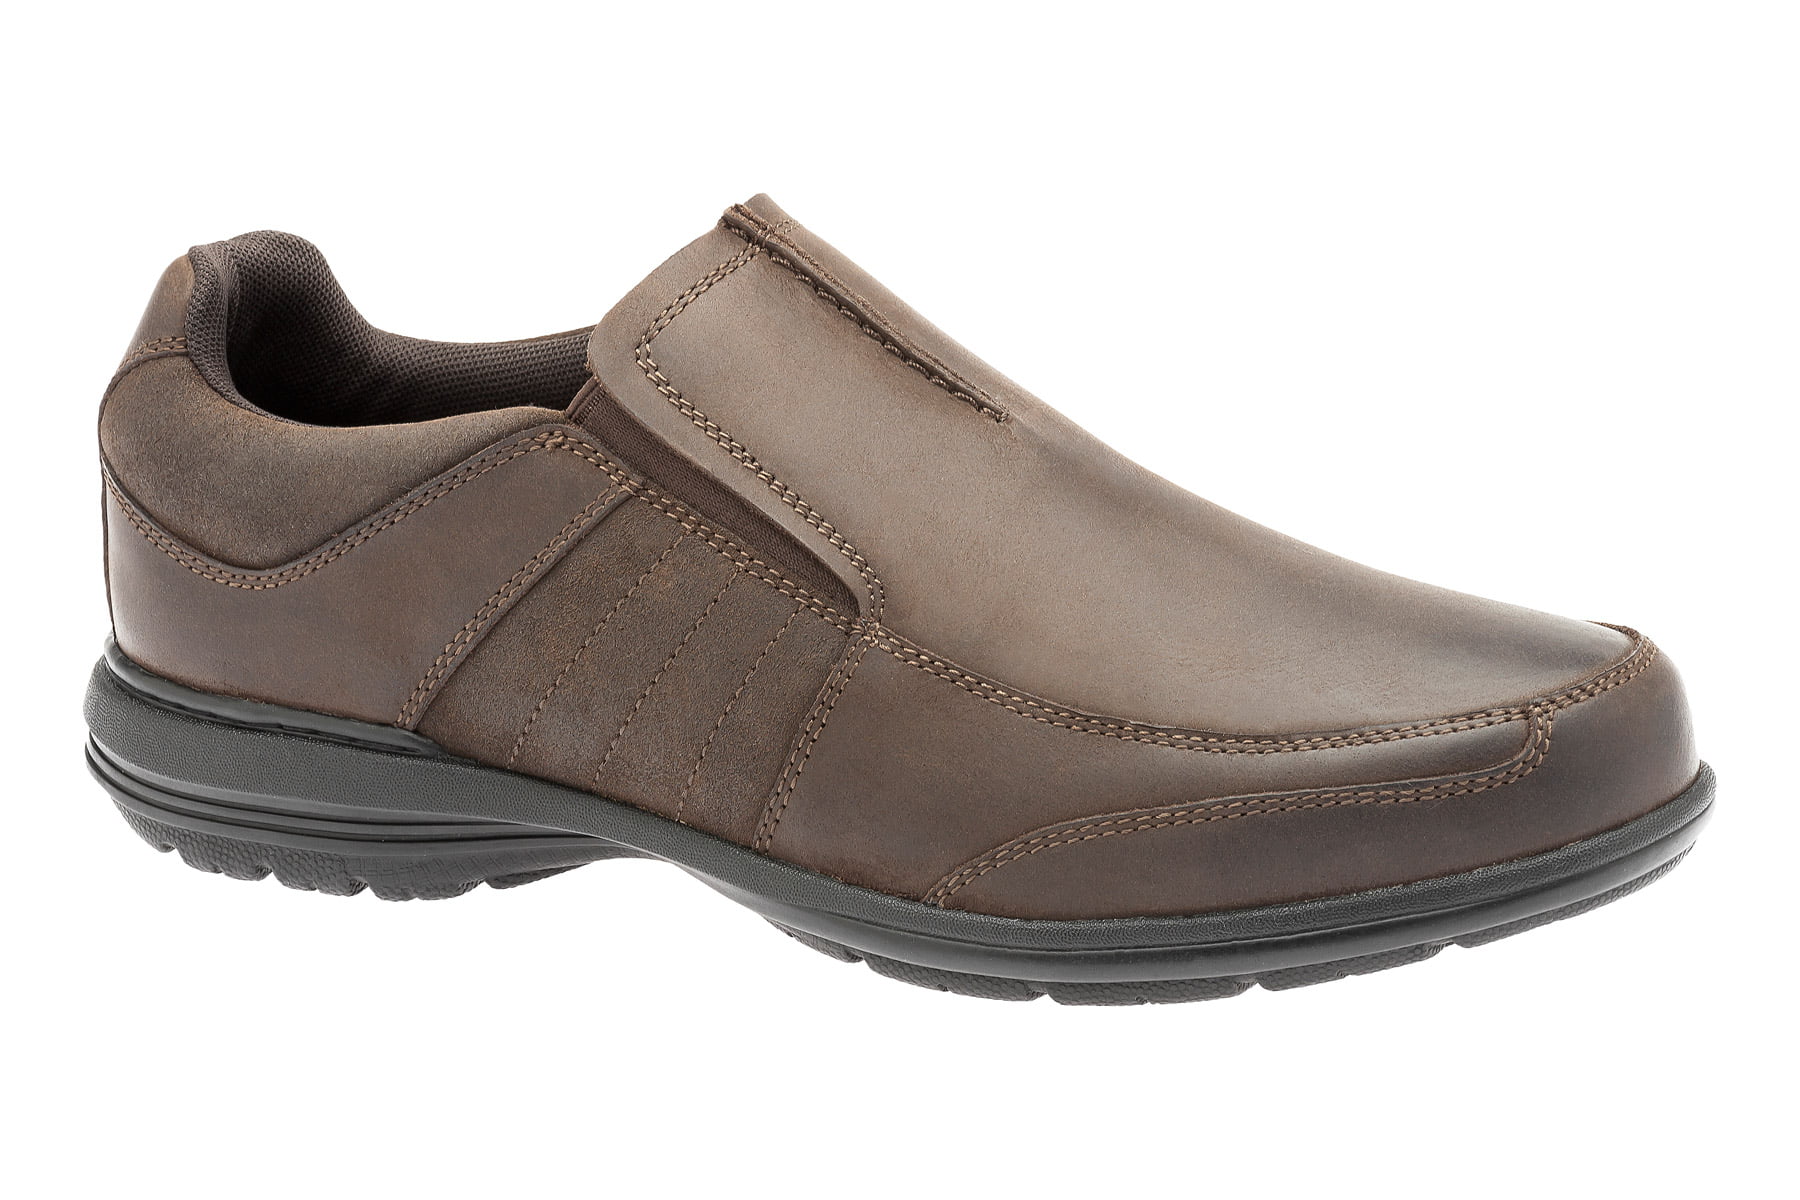 ABEO Footwear - ABEO Men's Master - Casual Shoes - Walmart.com ...